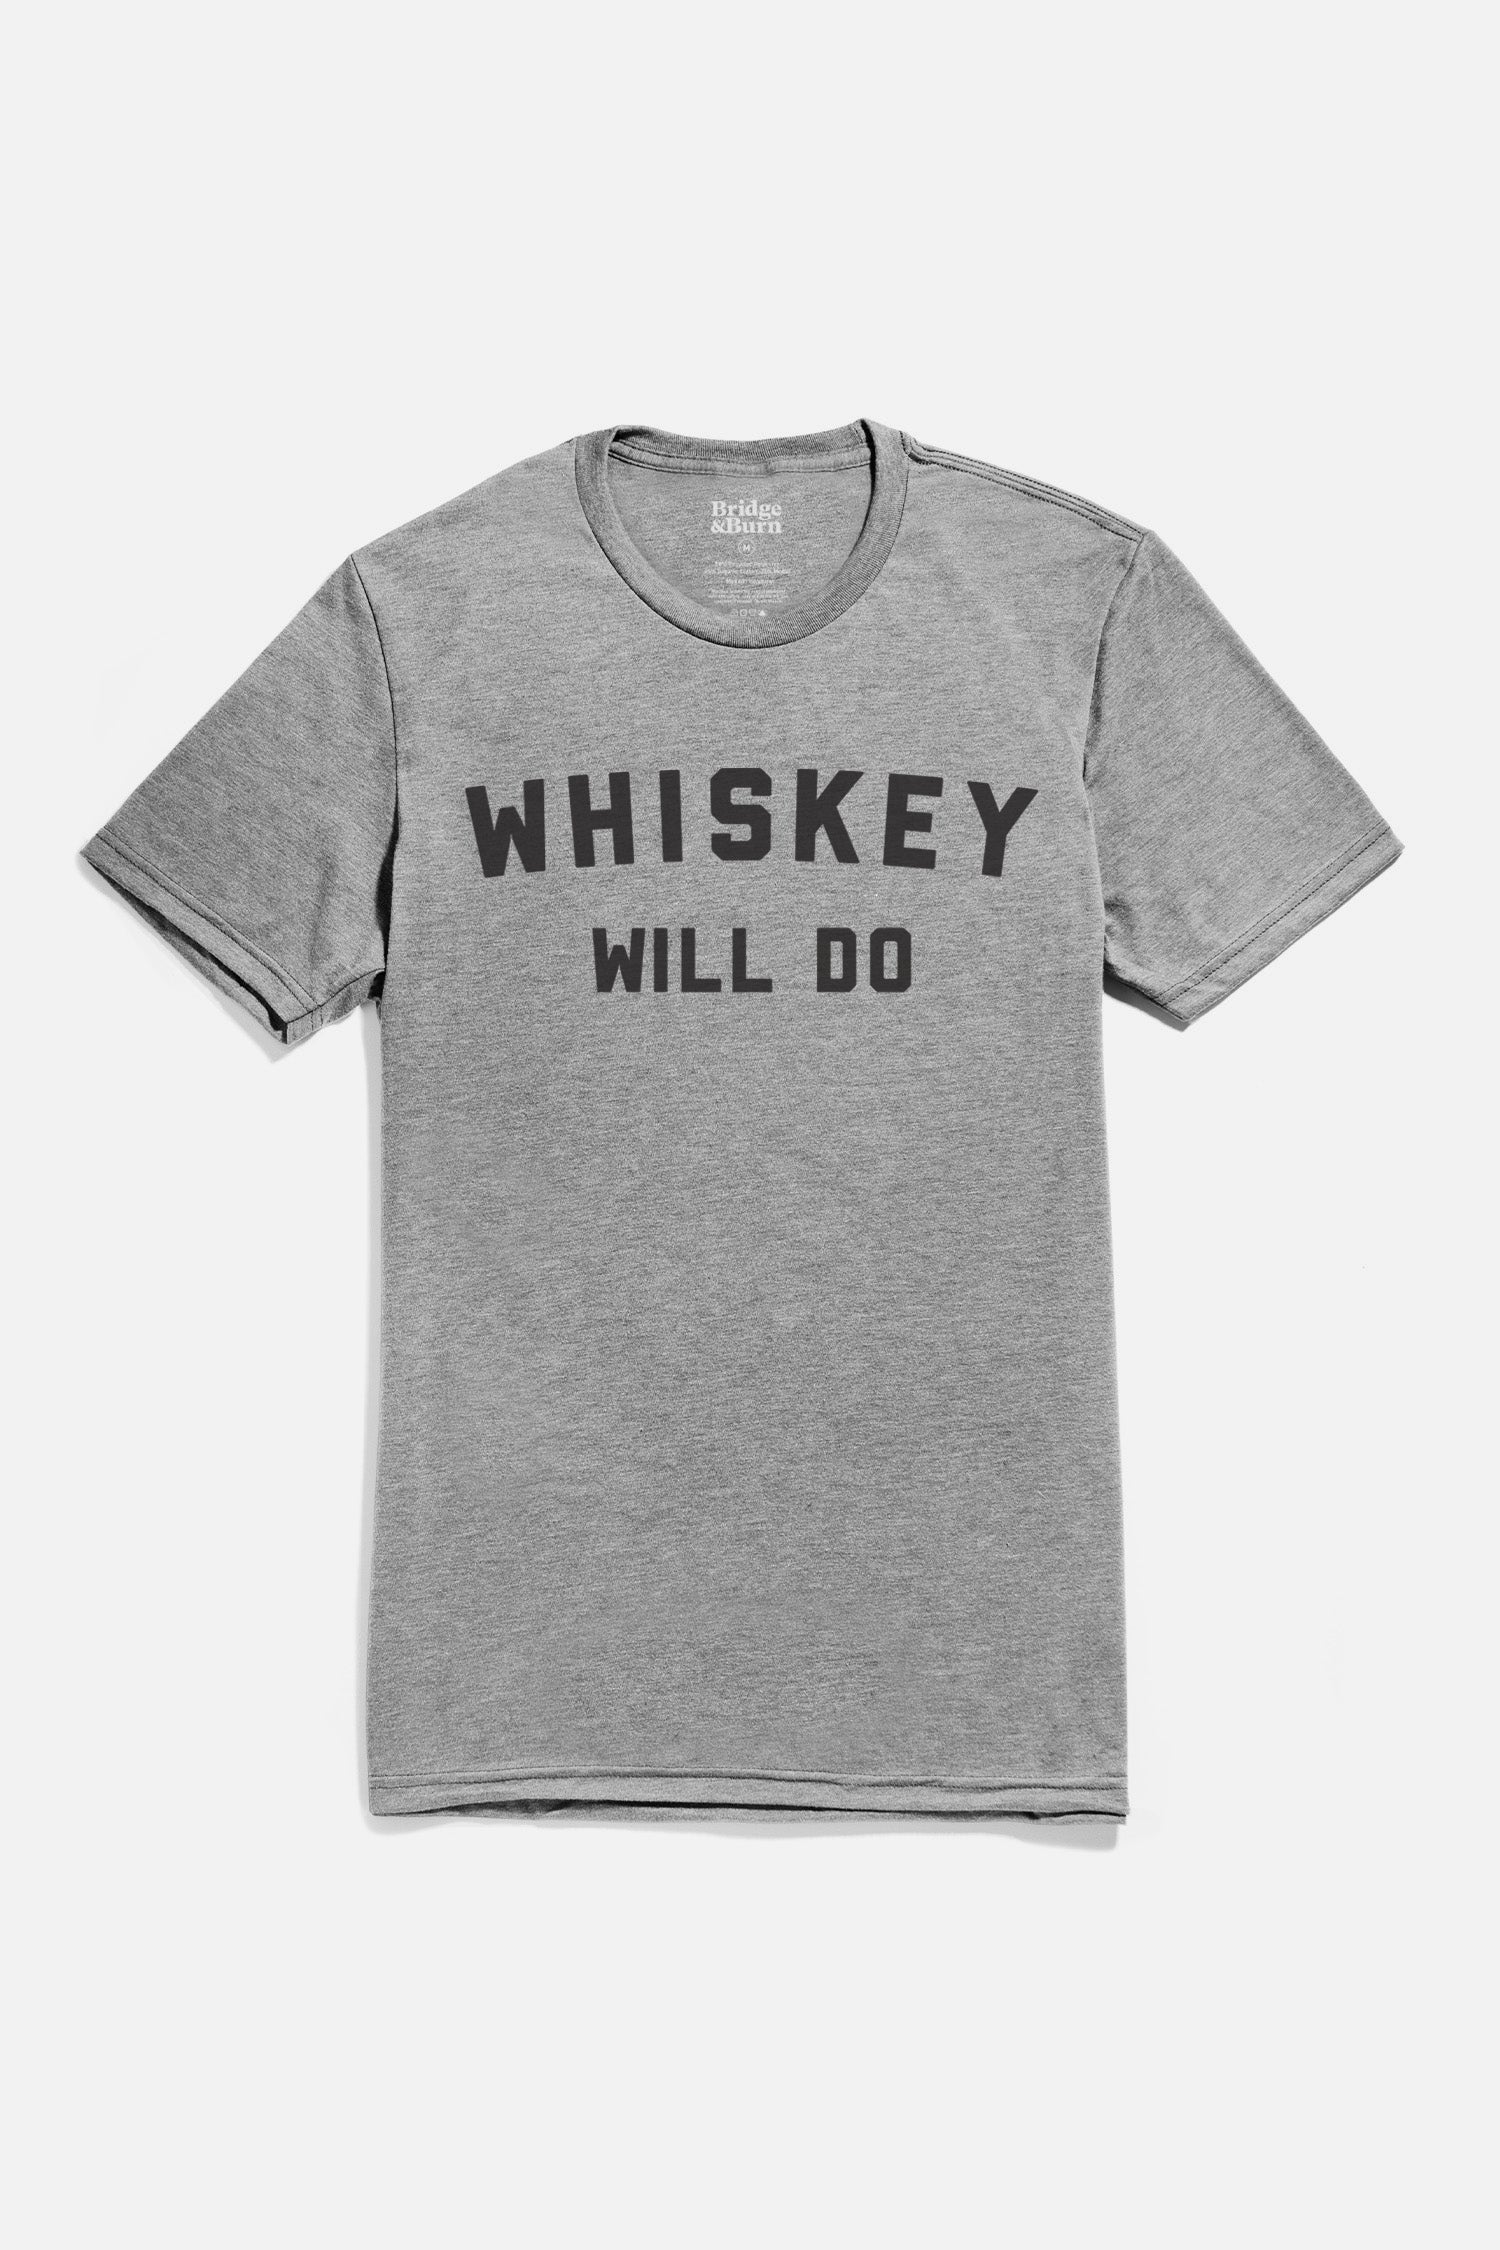 Whiskey will do Tシャツ